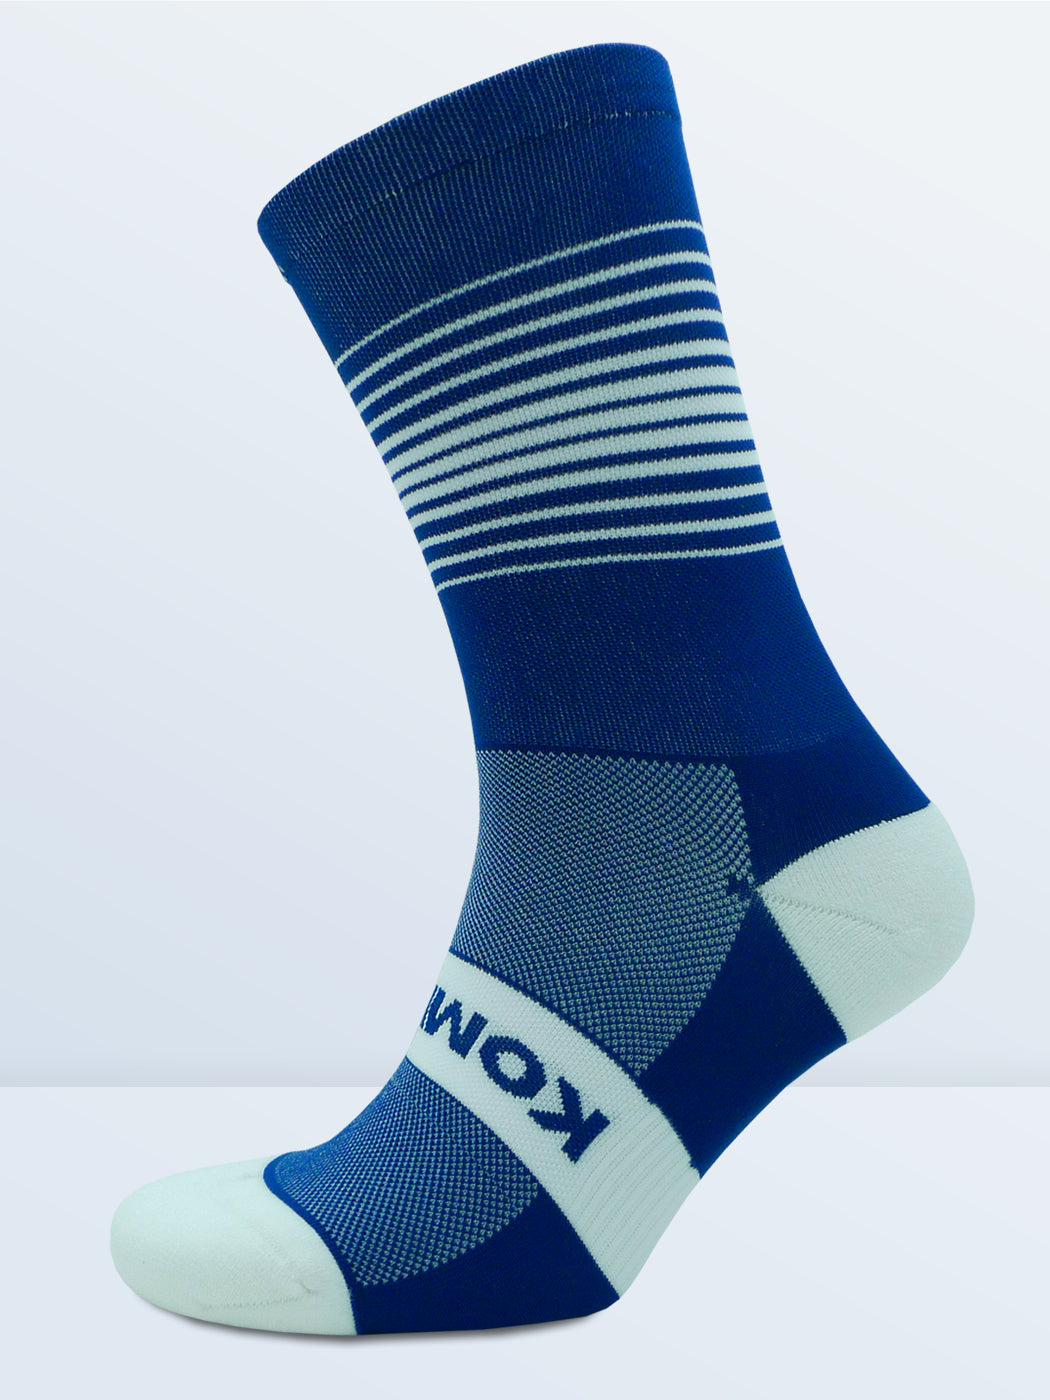 Swagger Socks - Navy Blue